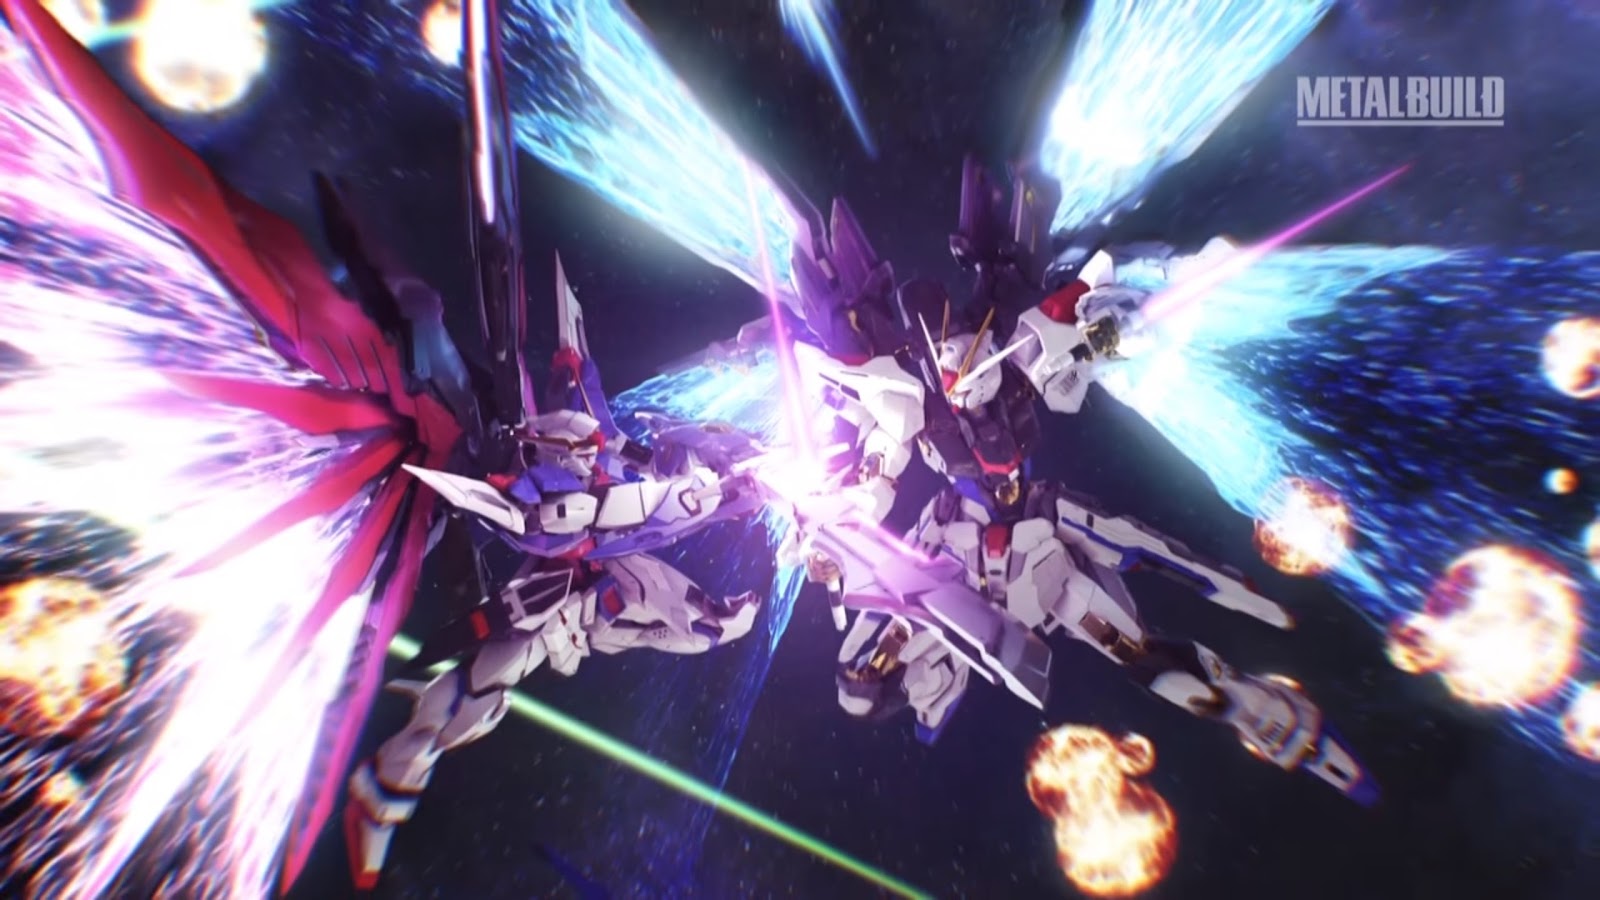 Jk S Photos Games Toys Studio 玩具 Metal Build Strike Freedom Gundam 光の翼option Set Destiny Gundam 光の翼 Renewal 情報 15 11 19 Up